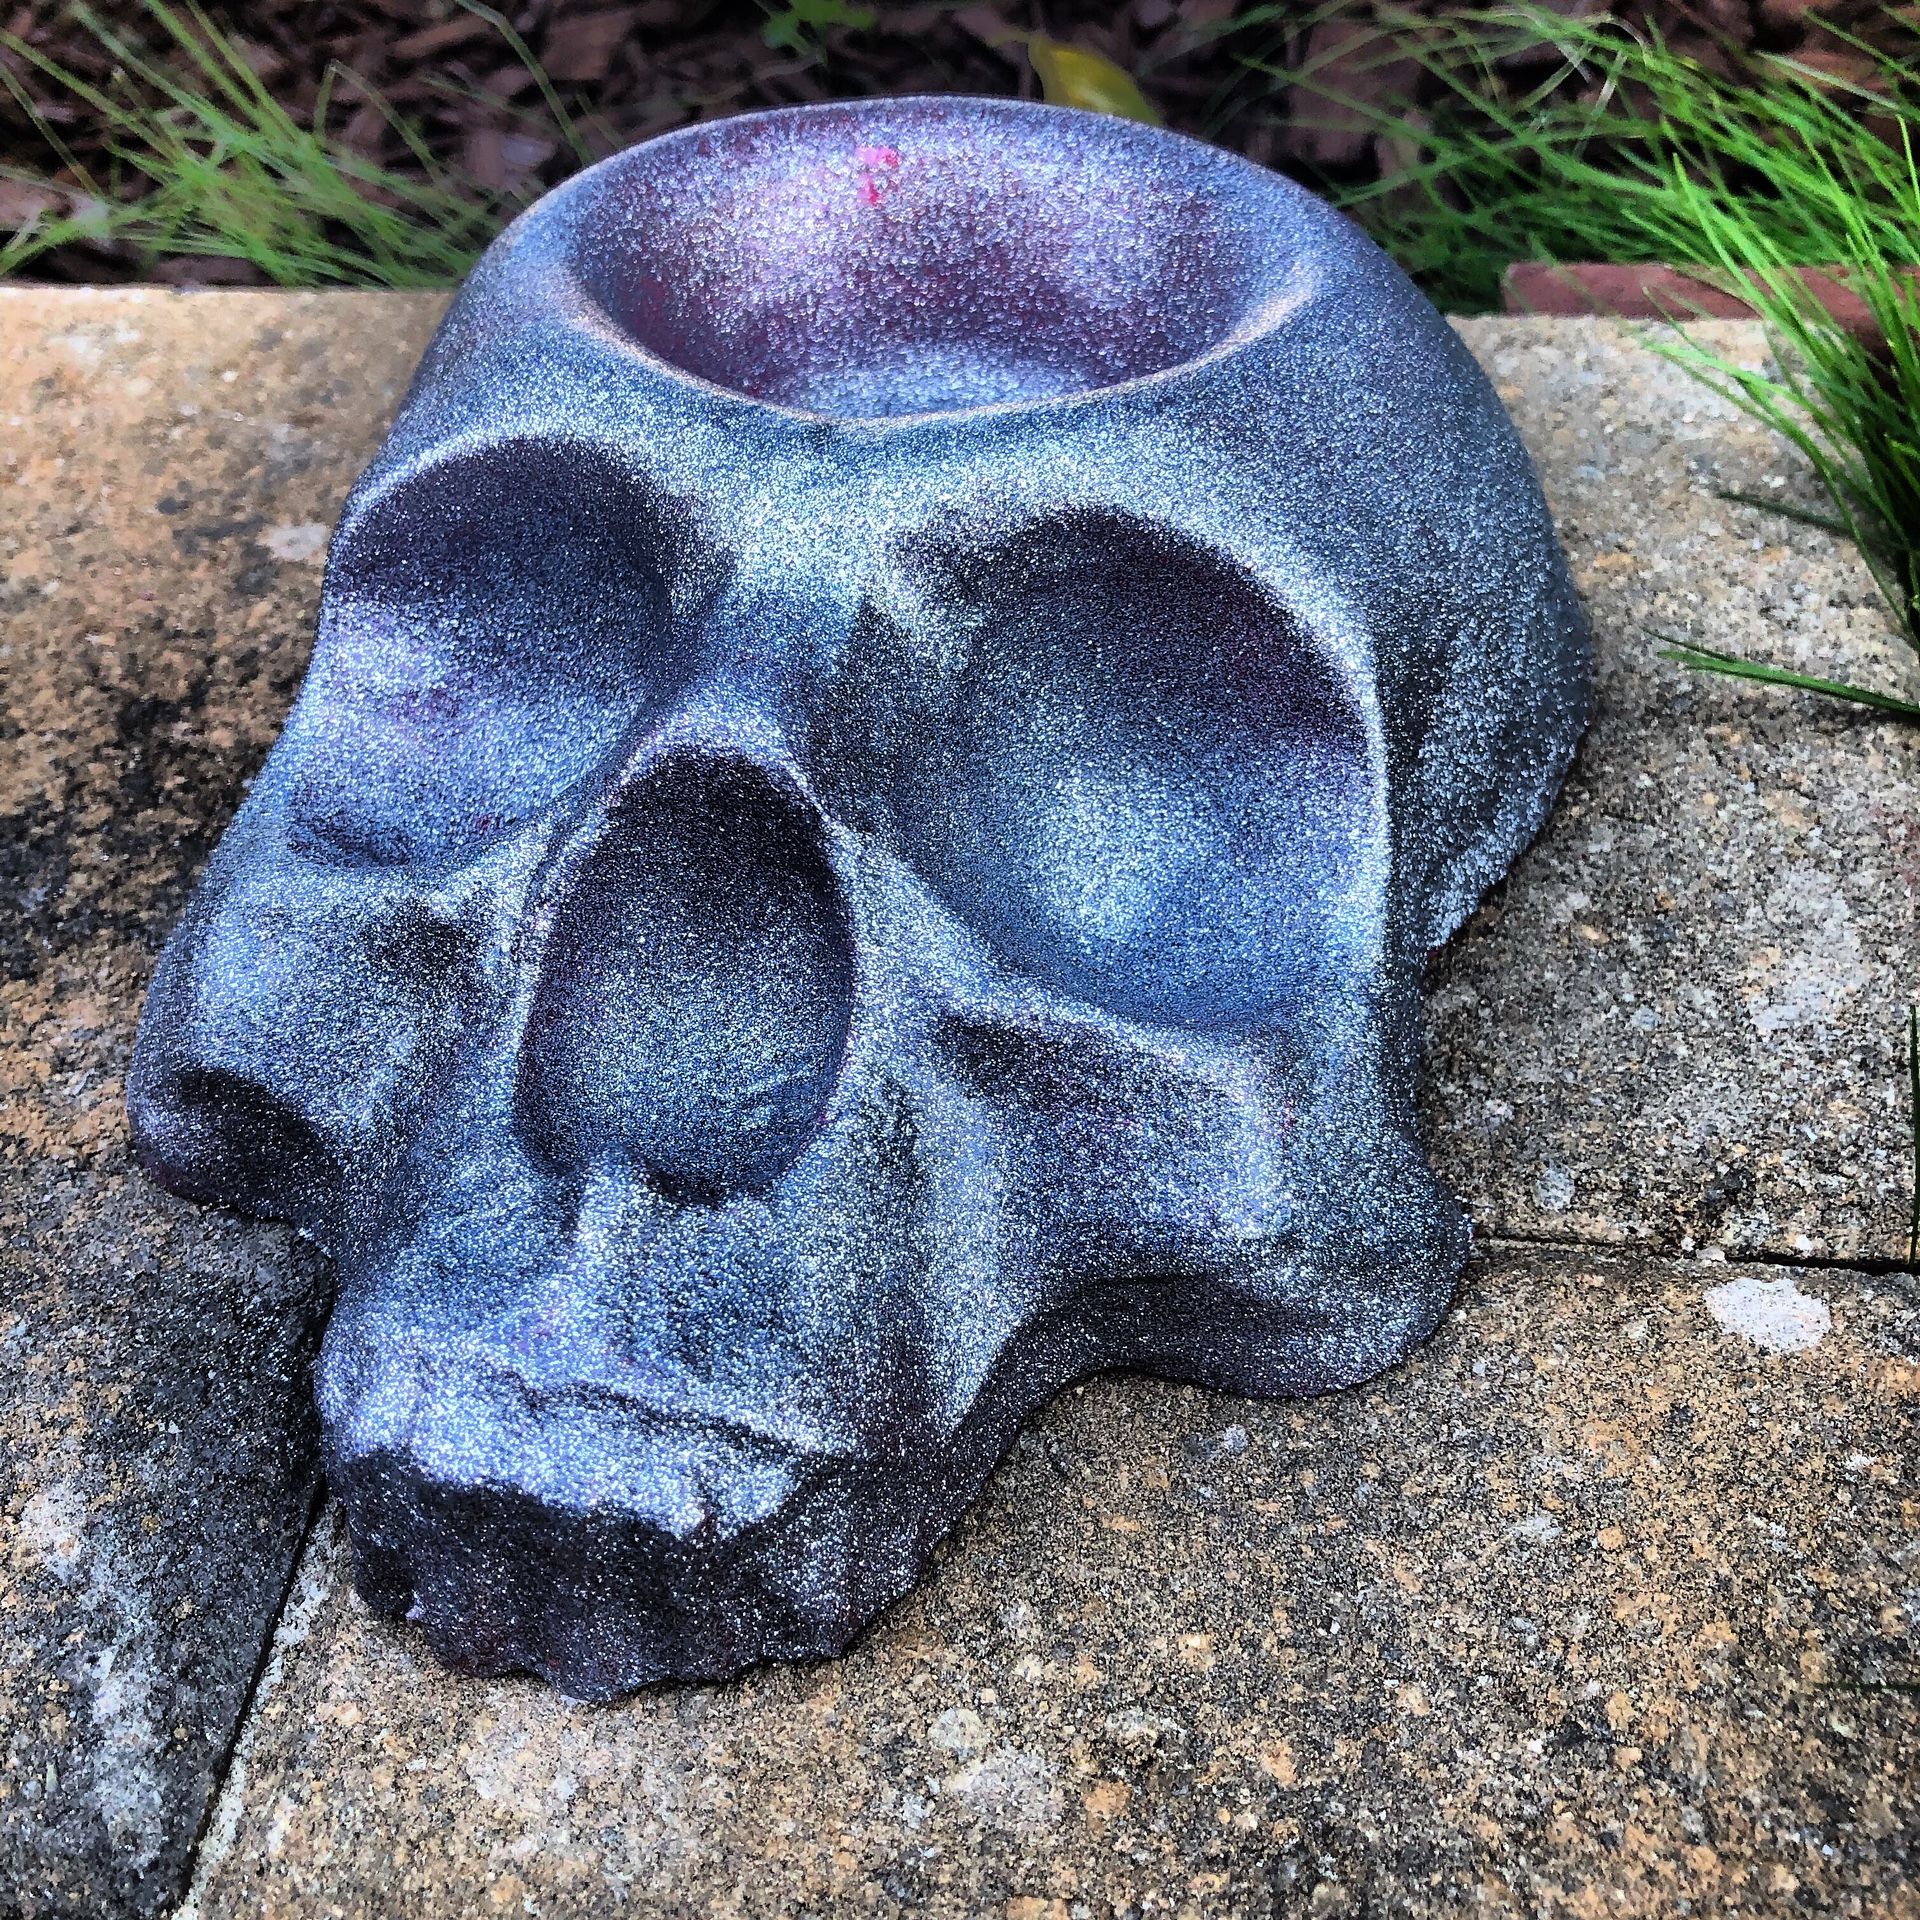 Skull candle holders/succulent pots!